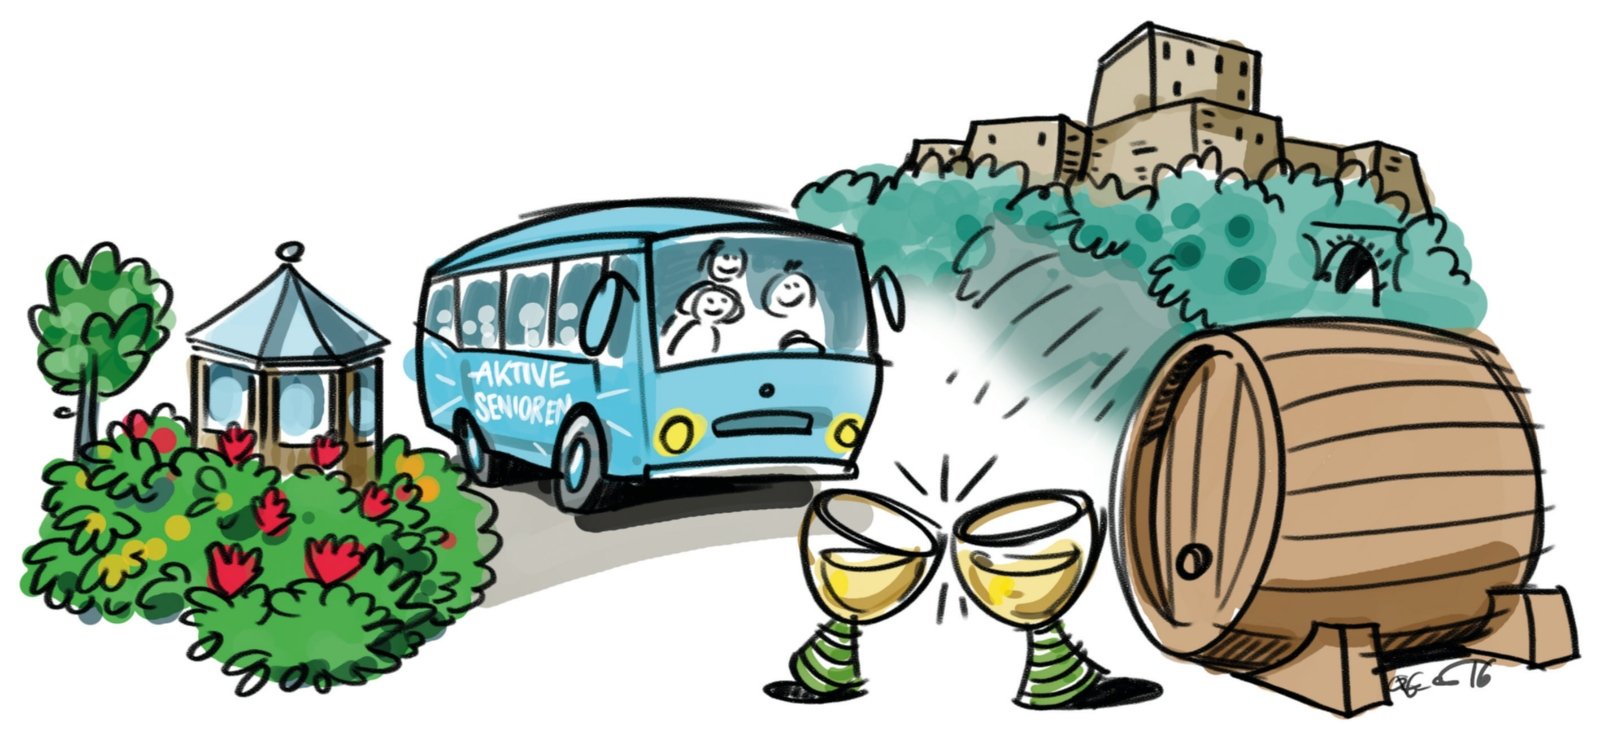 Aktive Senioren im Bus unterwegs (c) Peter Esser Illustration